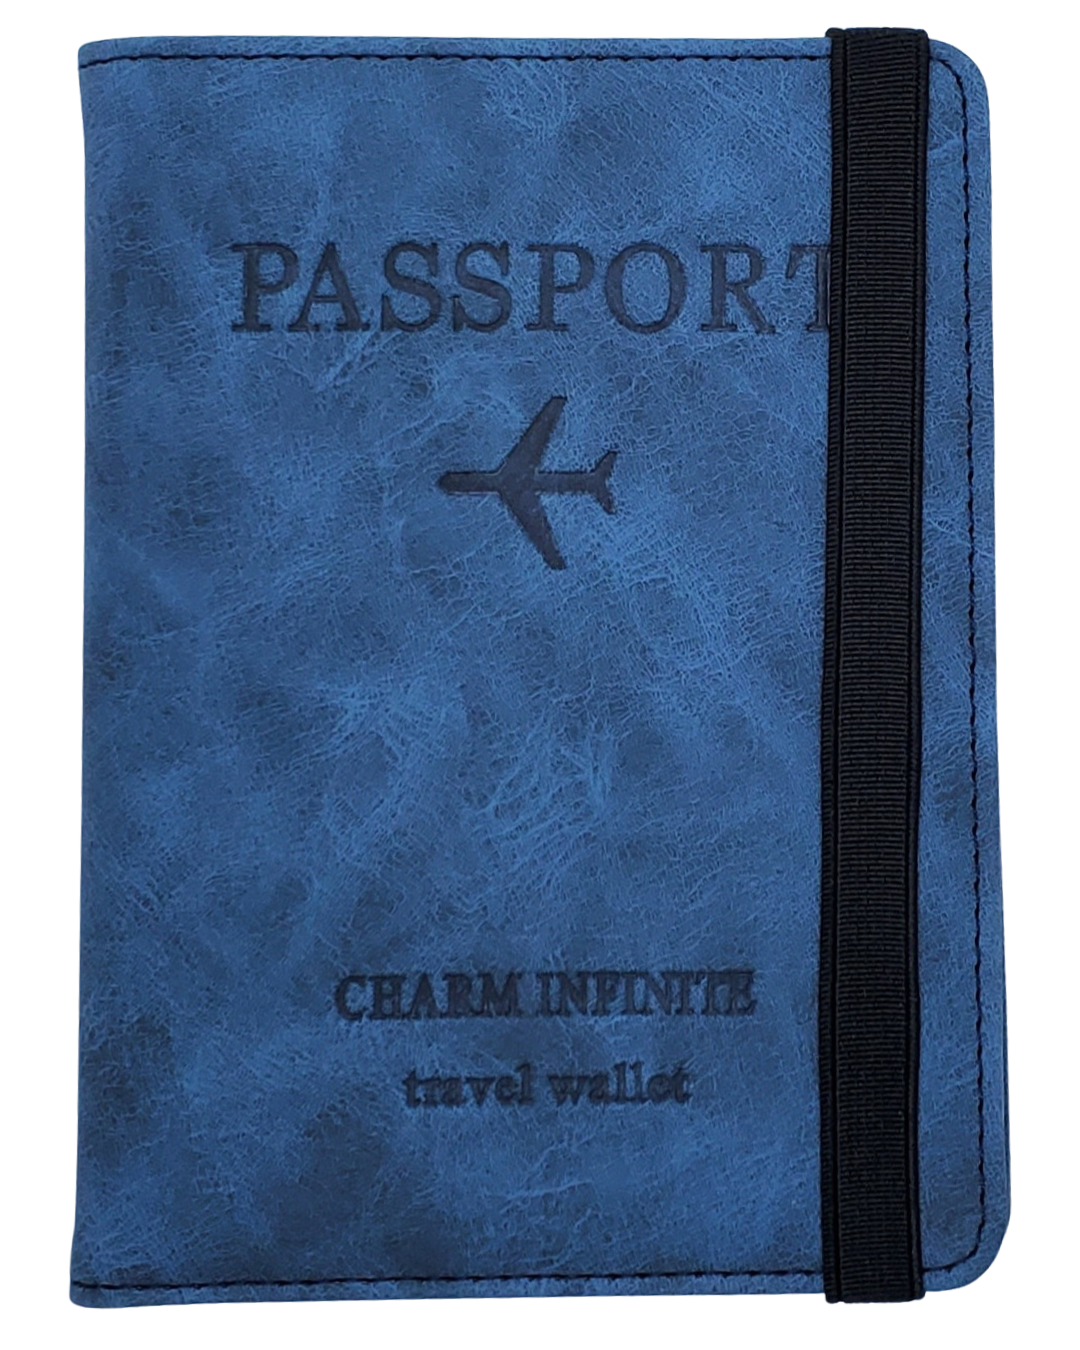 image of blue passport RIFD wallet